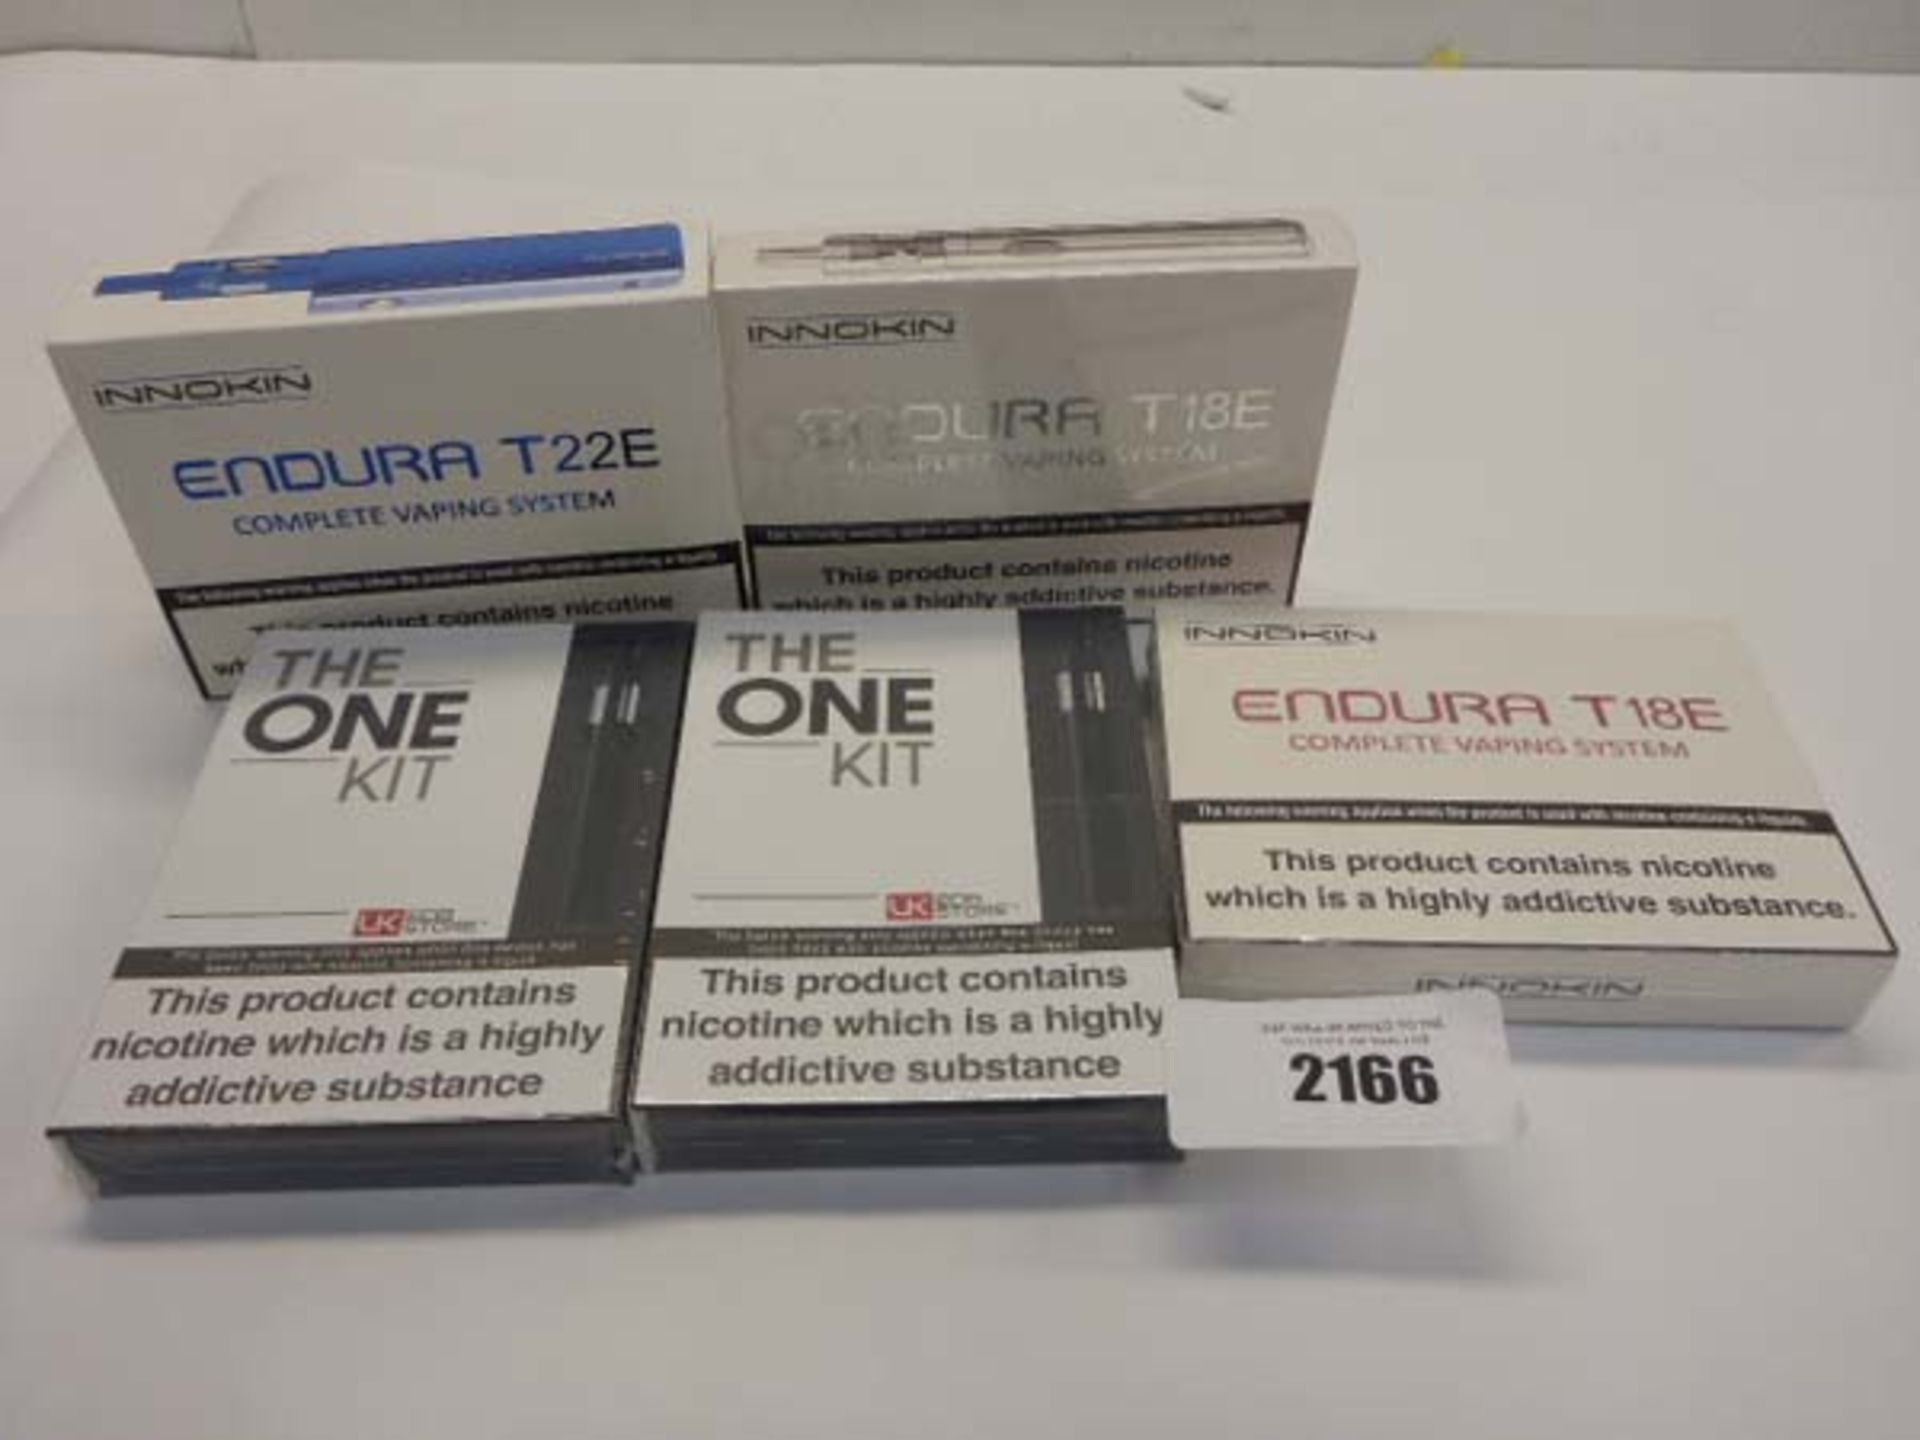 Innokin Endura T22E, 2x Endura T18E and 2x The One Kits